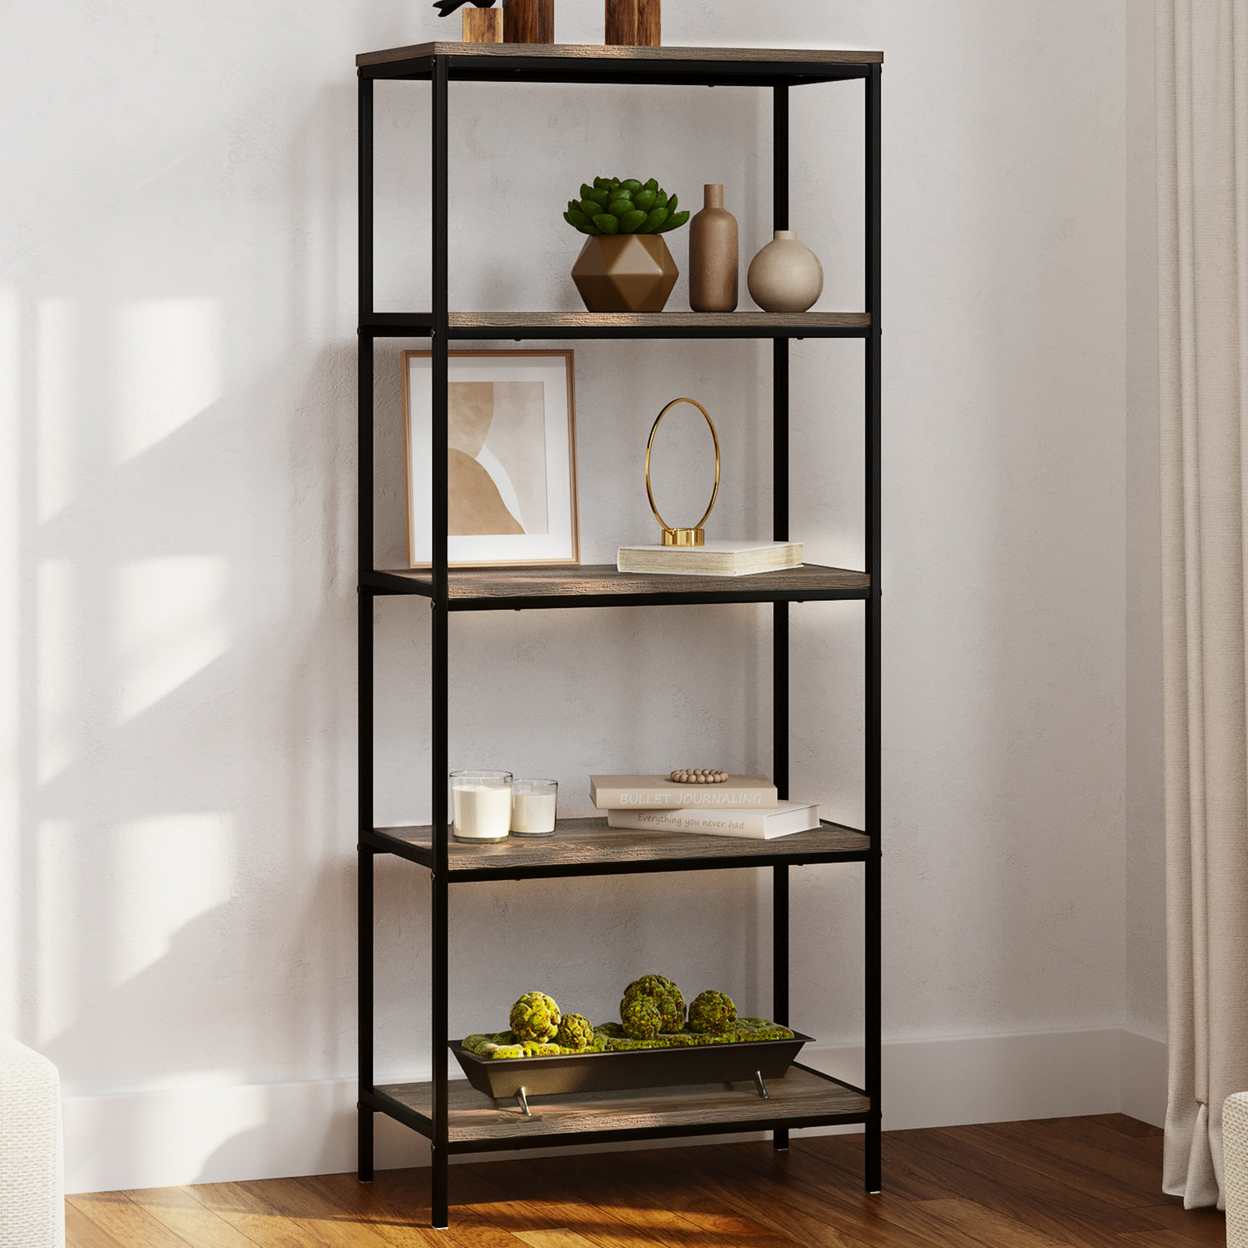 5-Tier Bookshelf Wooden Shelving Unit For Storage And Display, Gray Woodgrain